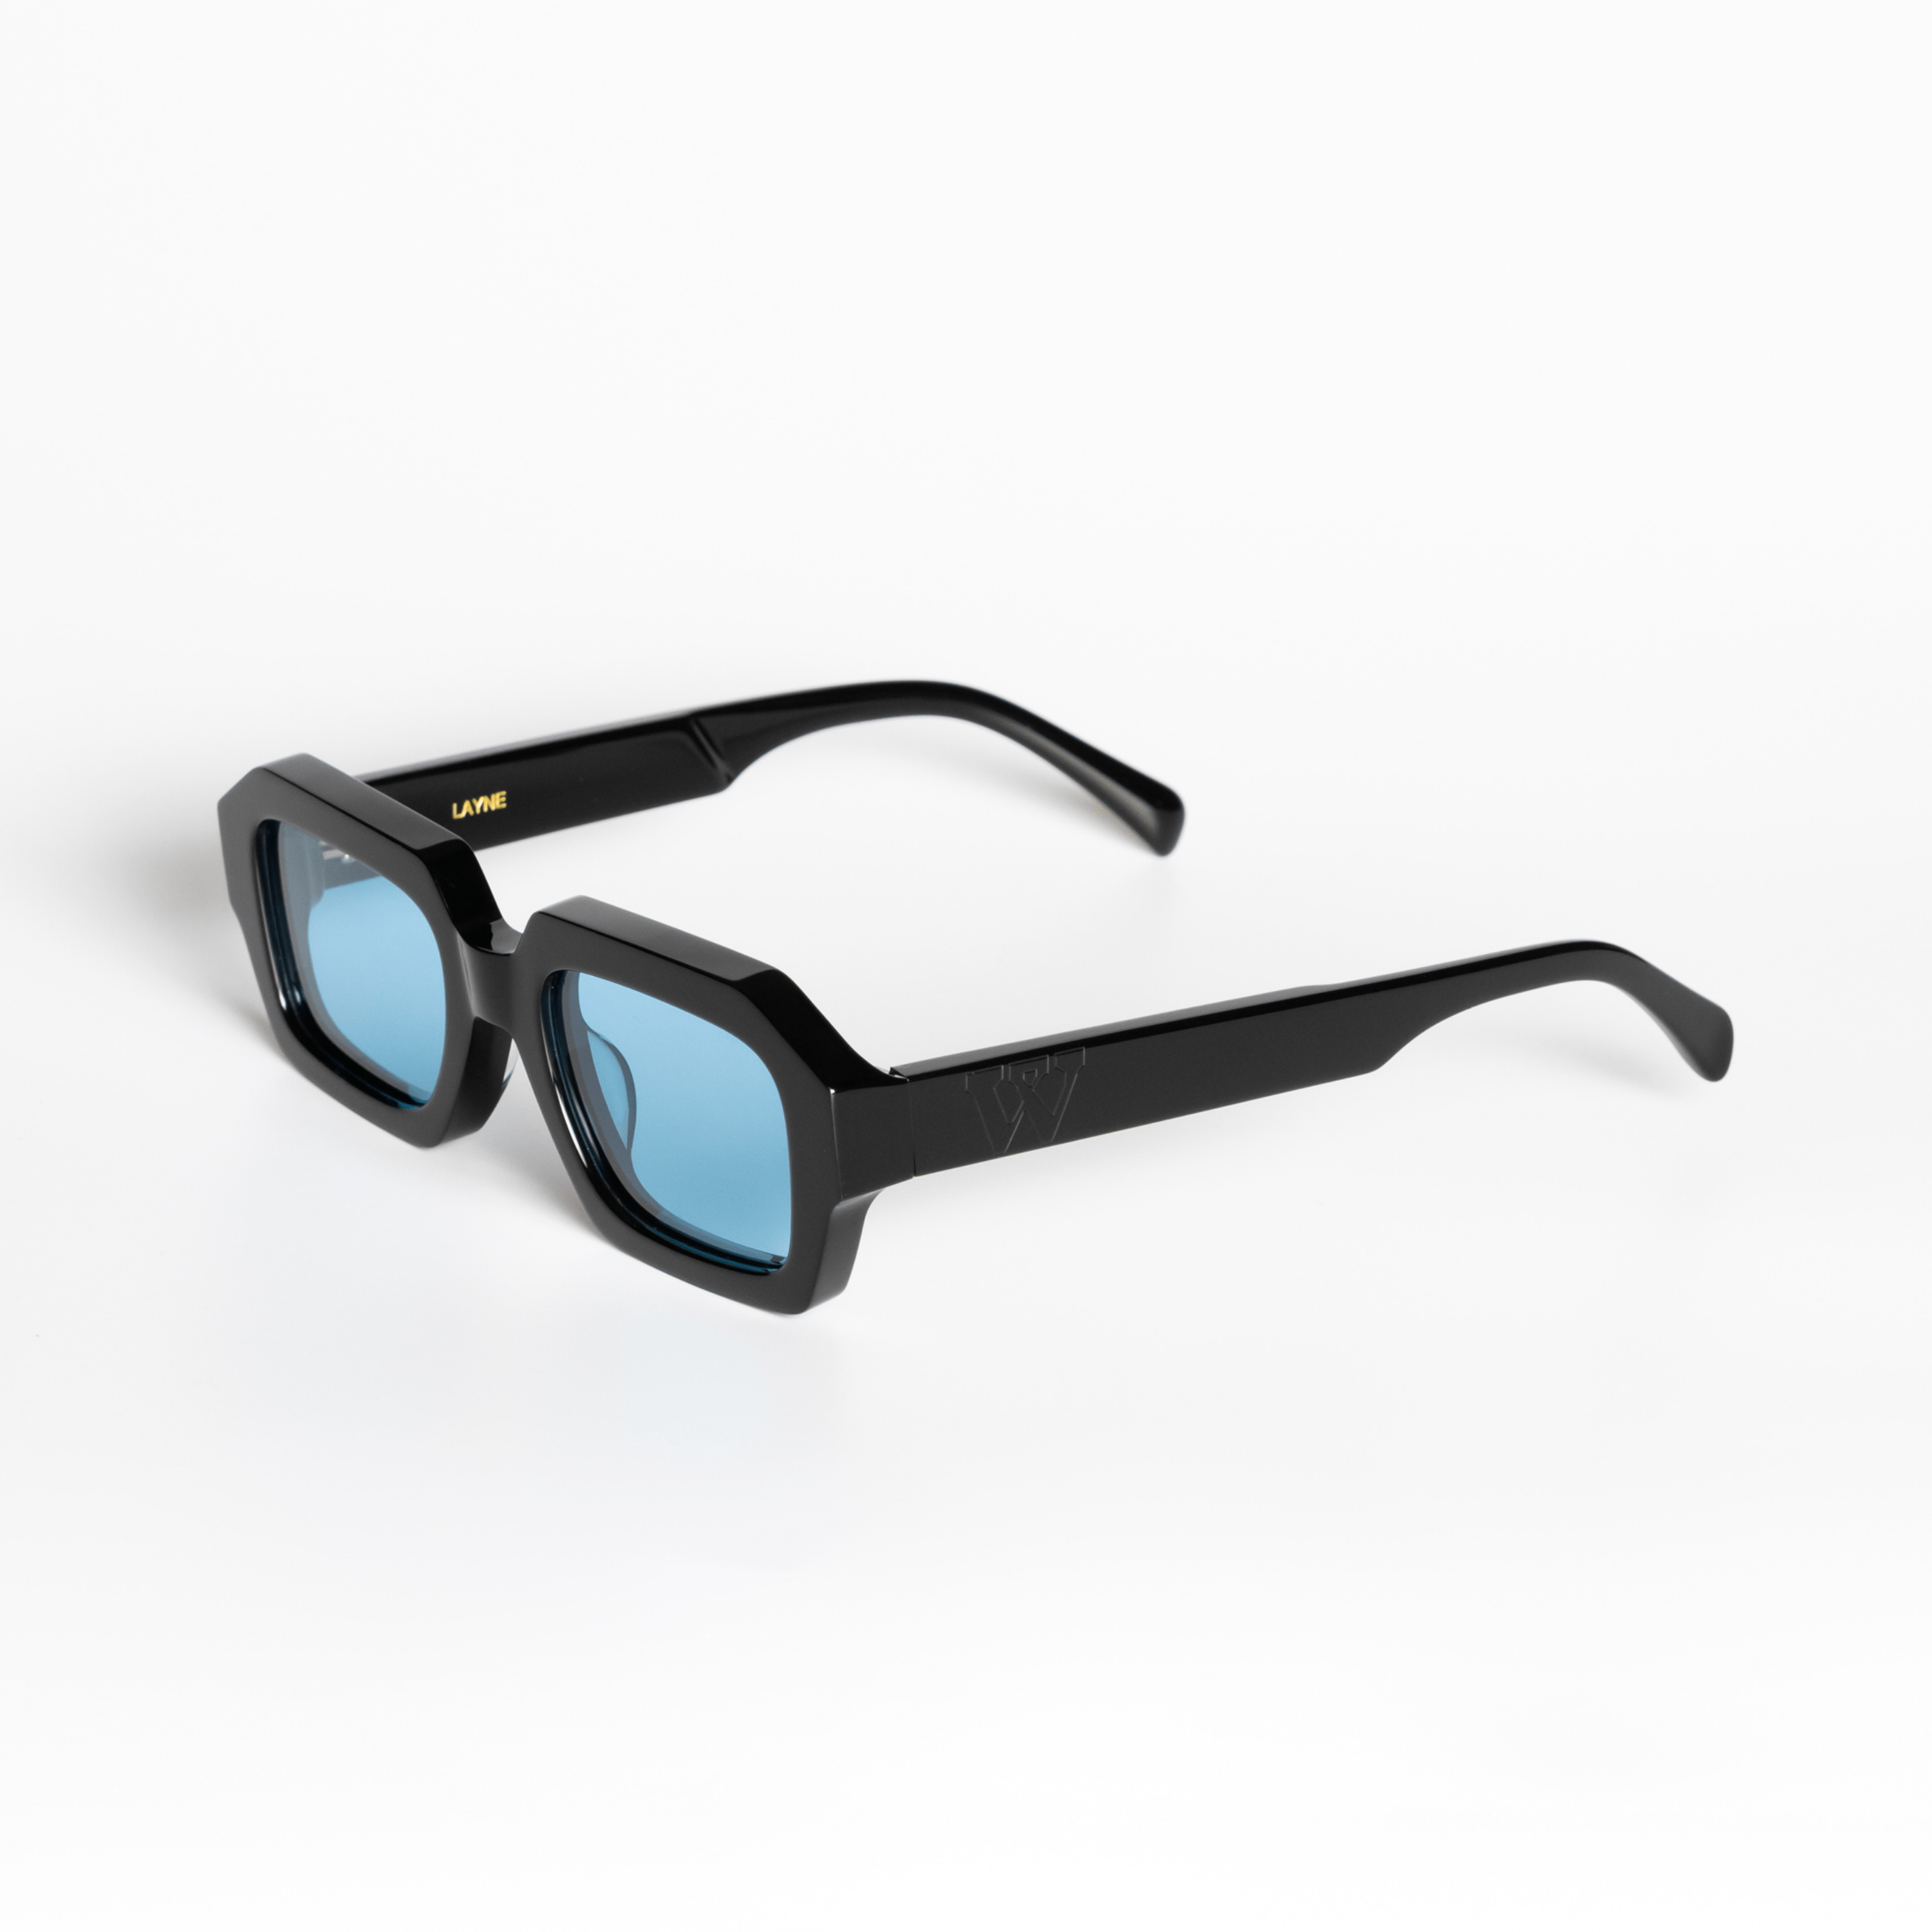 Walter Hill Sunglasses Black / Standard / Polarized Cat.3 LAYNE - Black - Blue